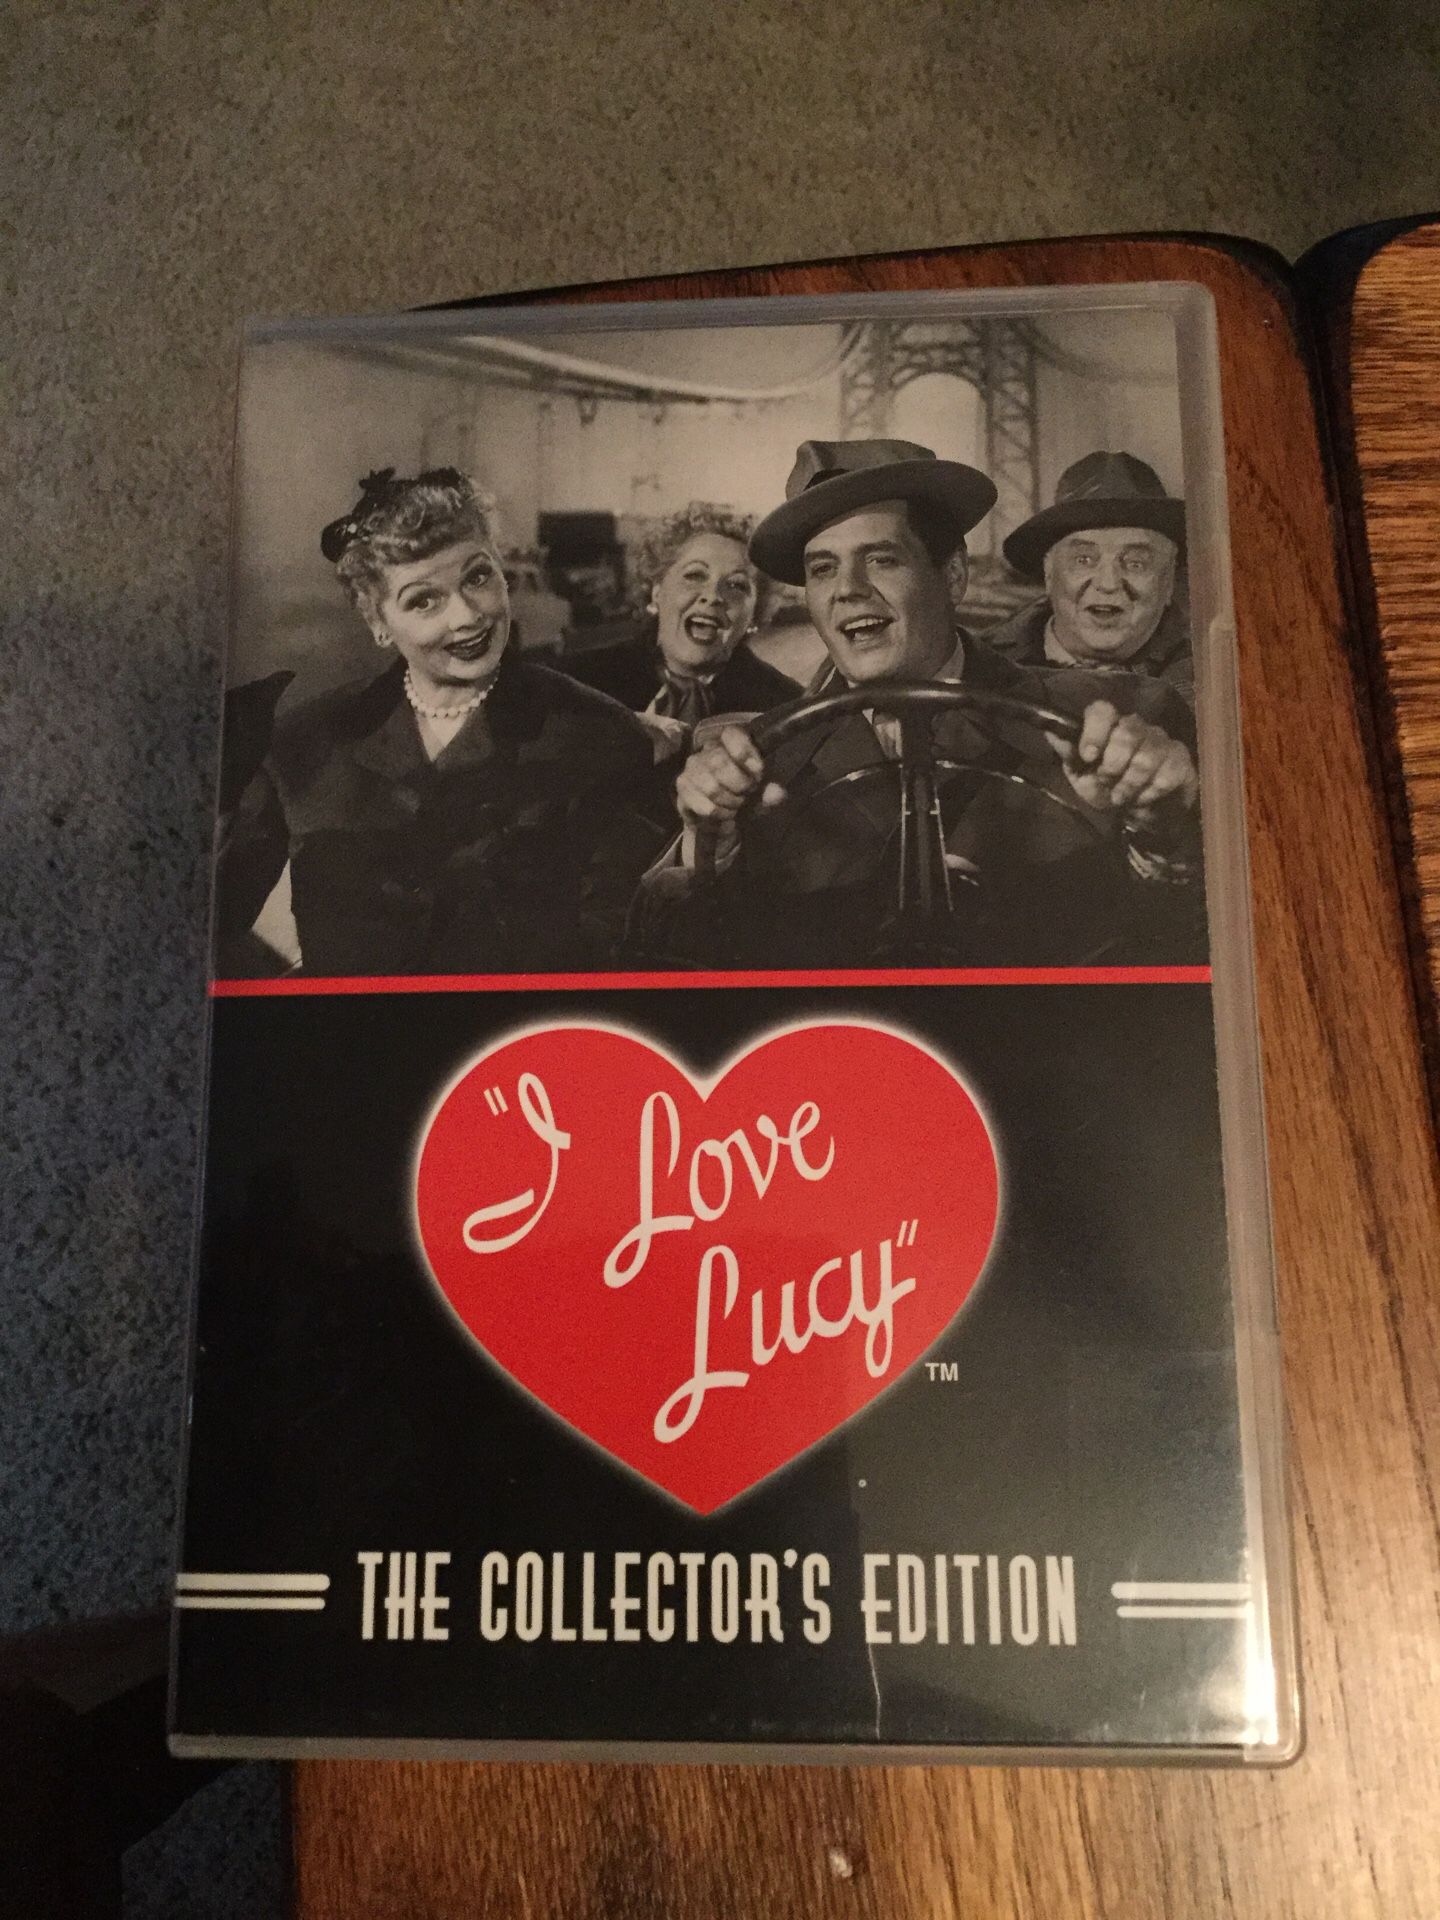 I love Lucy on DVD. seasons 1-5